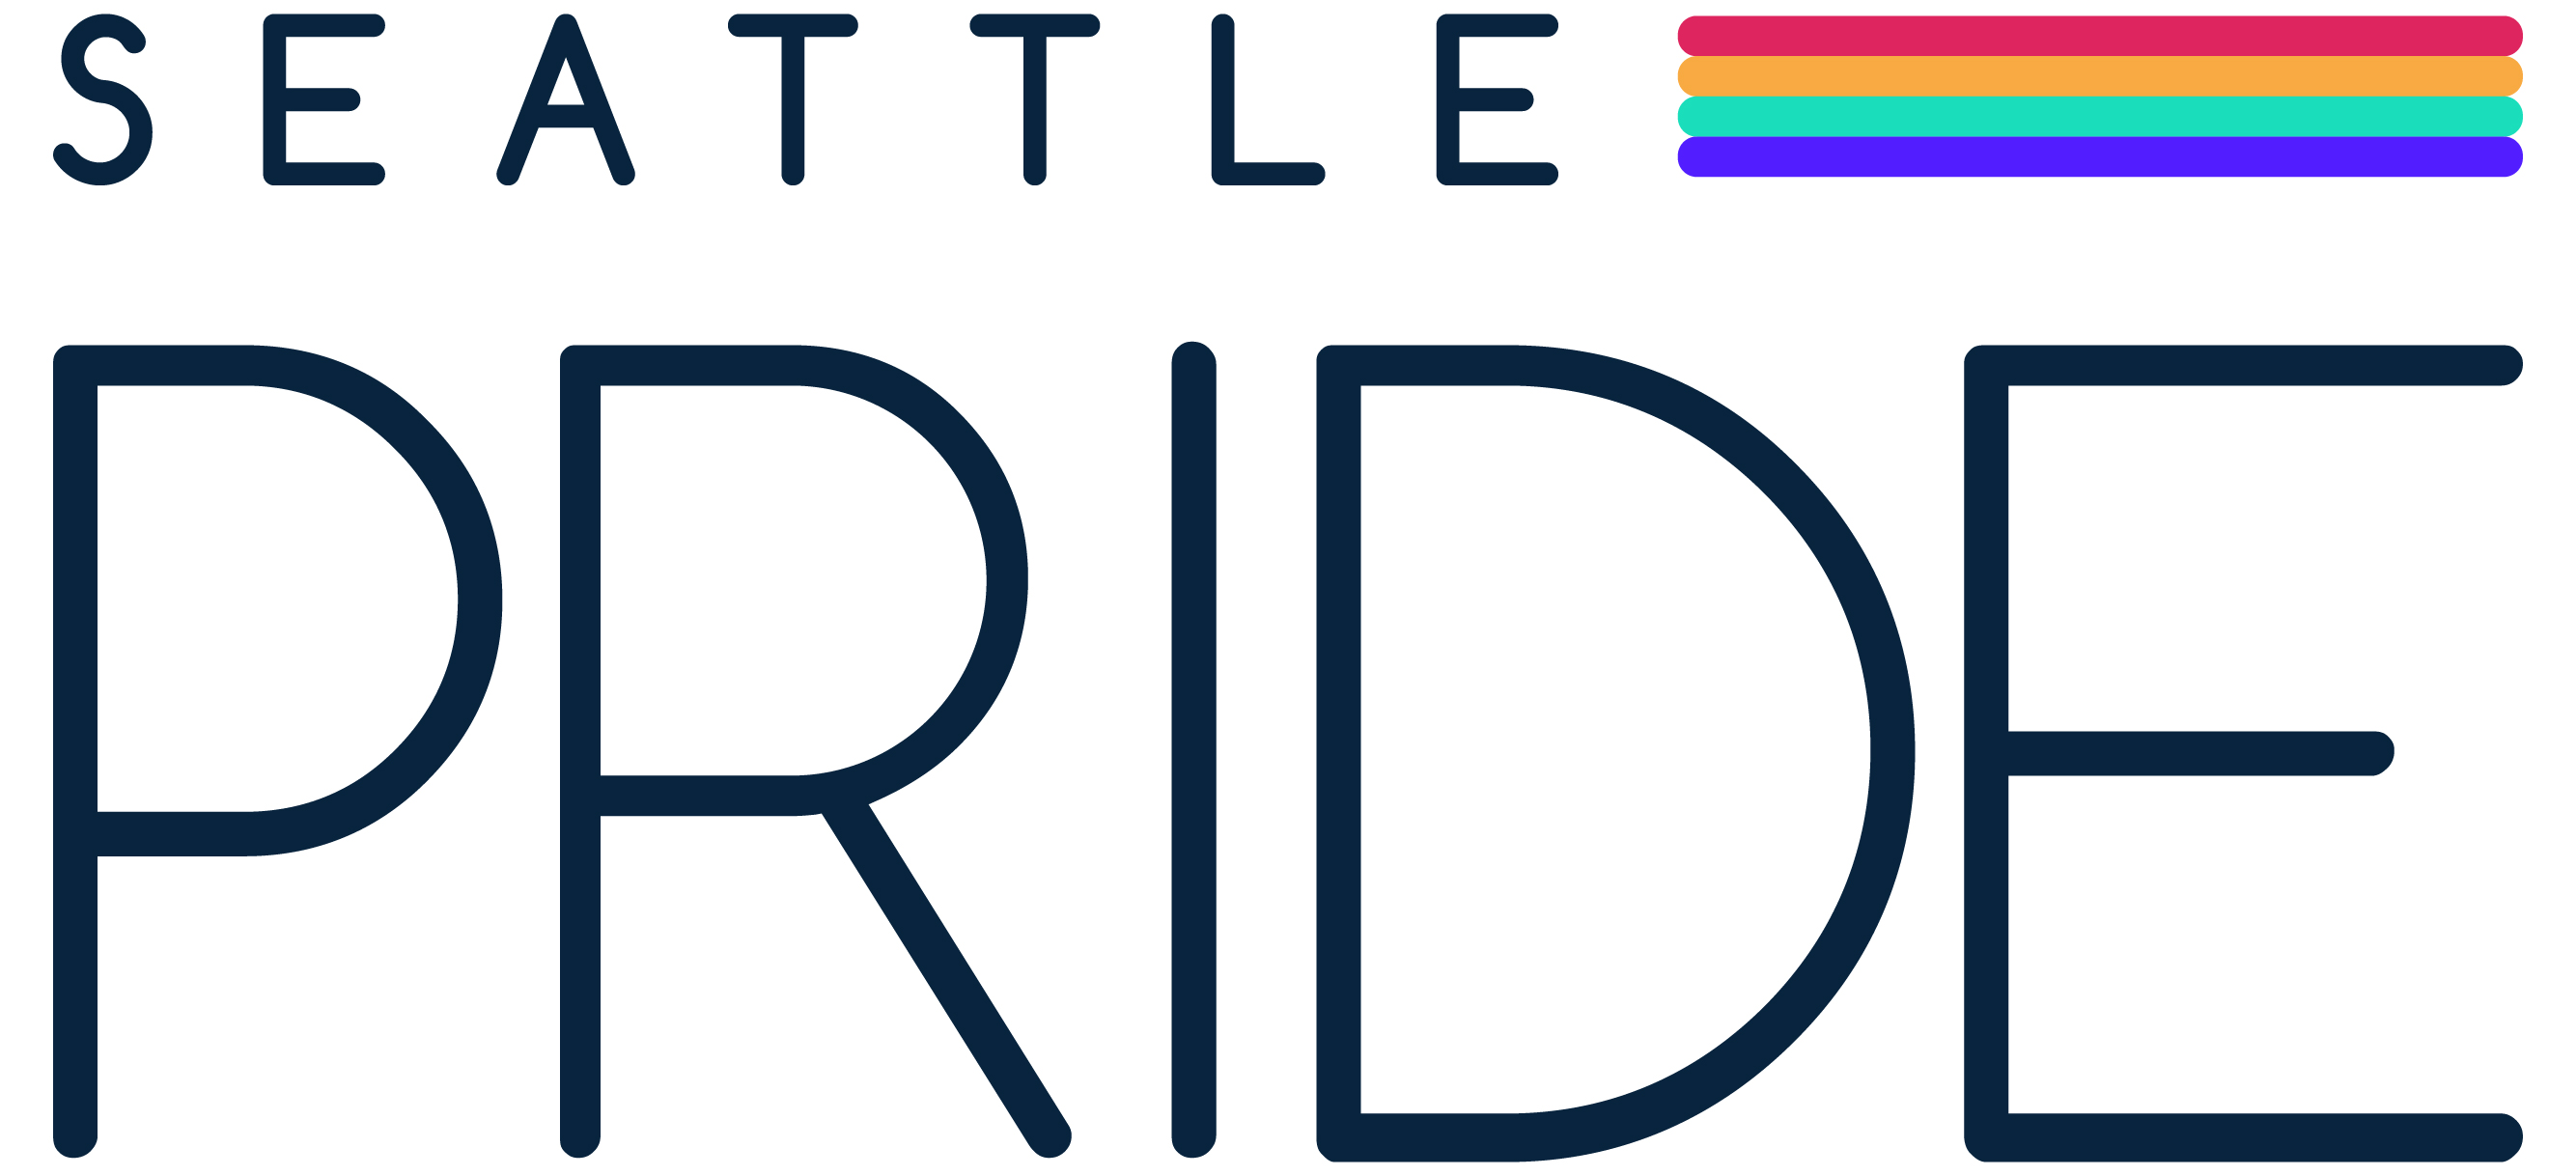 Seattle Pride logo